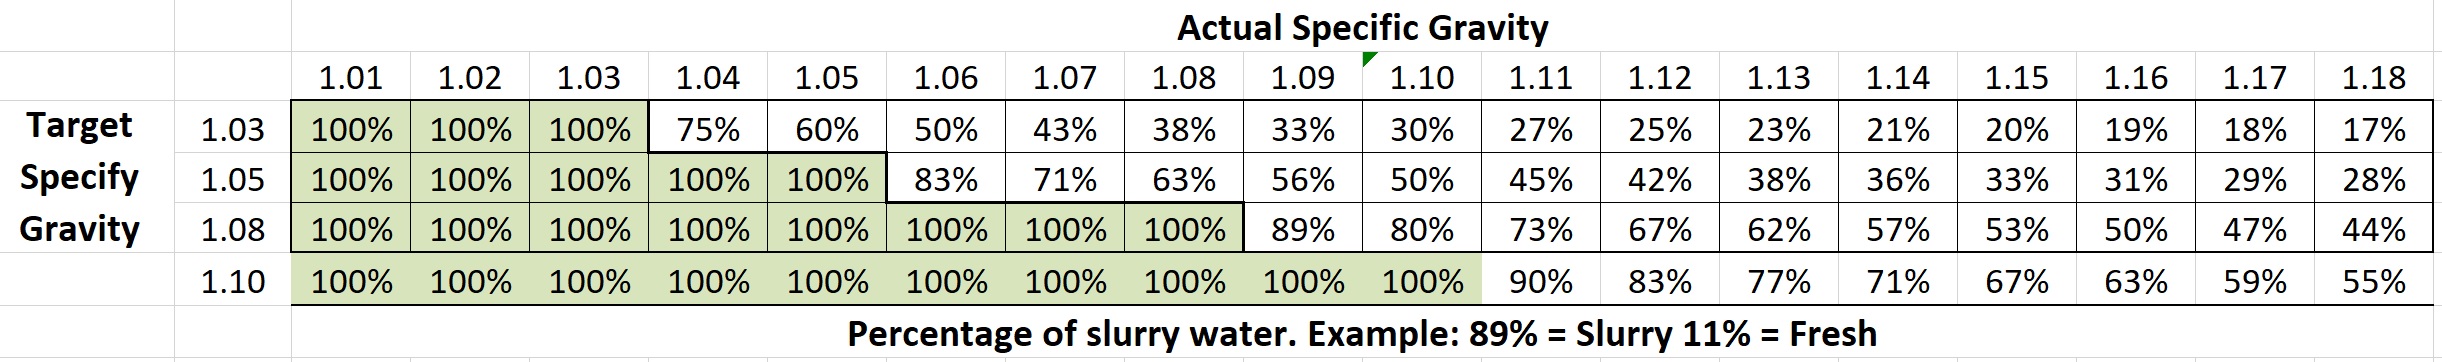 Specific Gravity chart for Concrete Slurry Washout